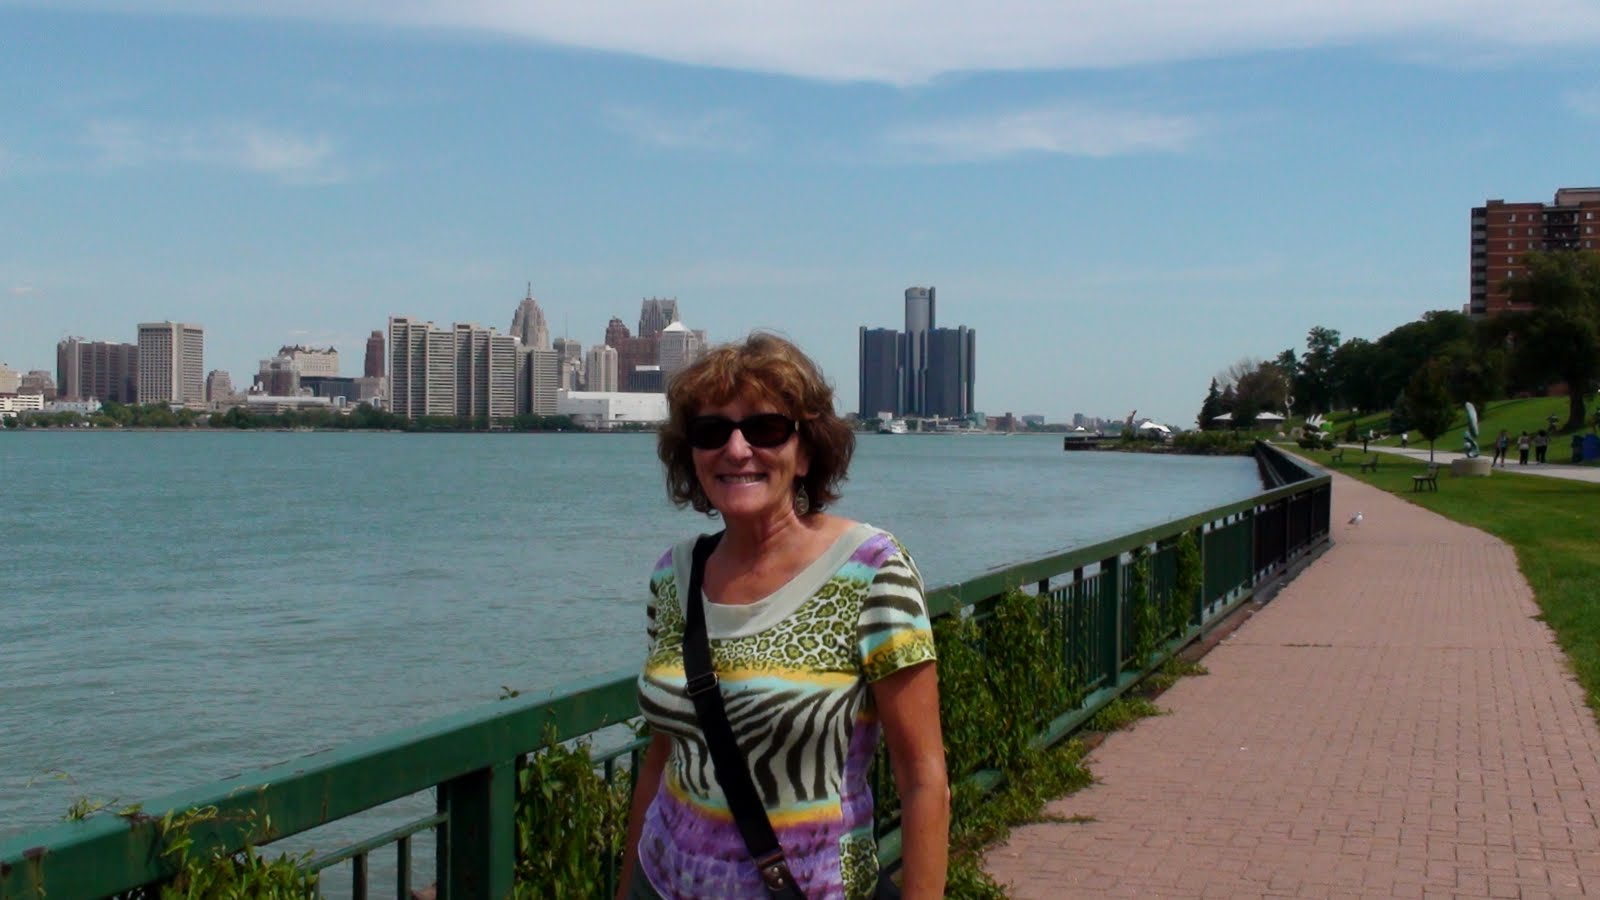 Liz in Winsdor Ontario looking across the Detroit River to Detroit, Michigan, USA.